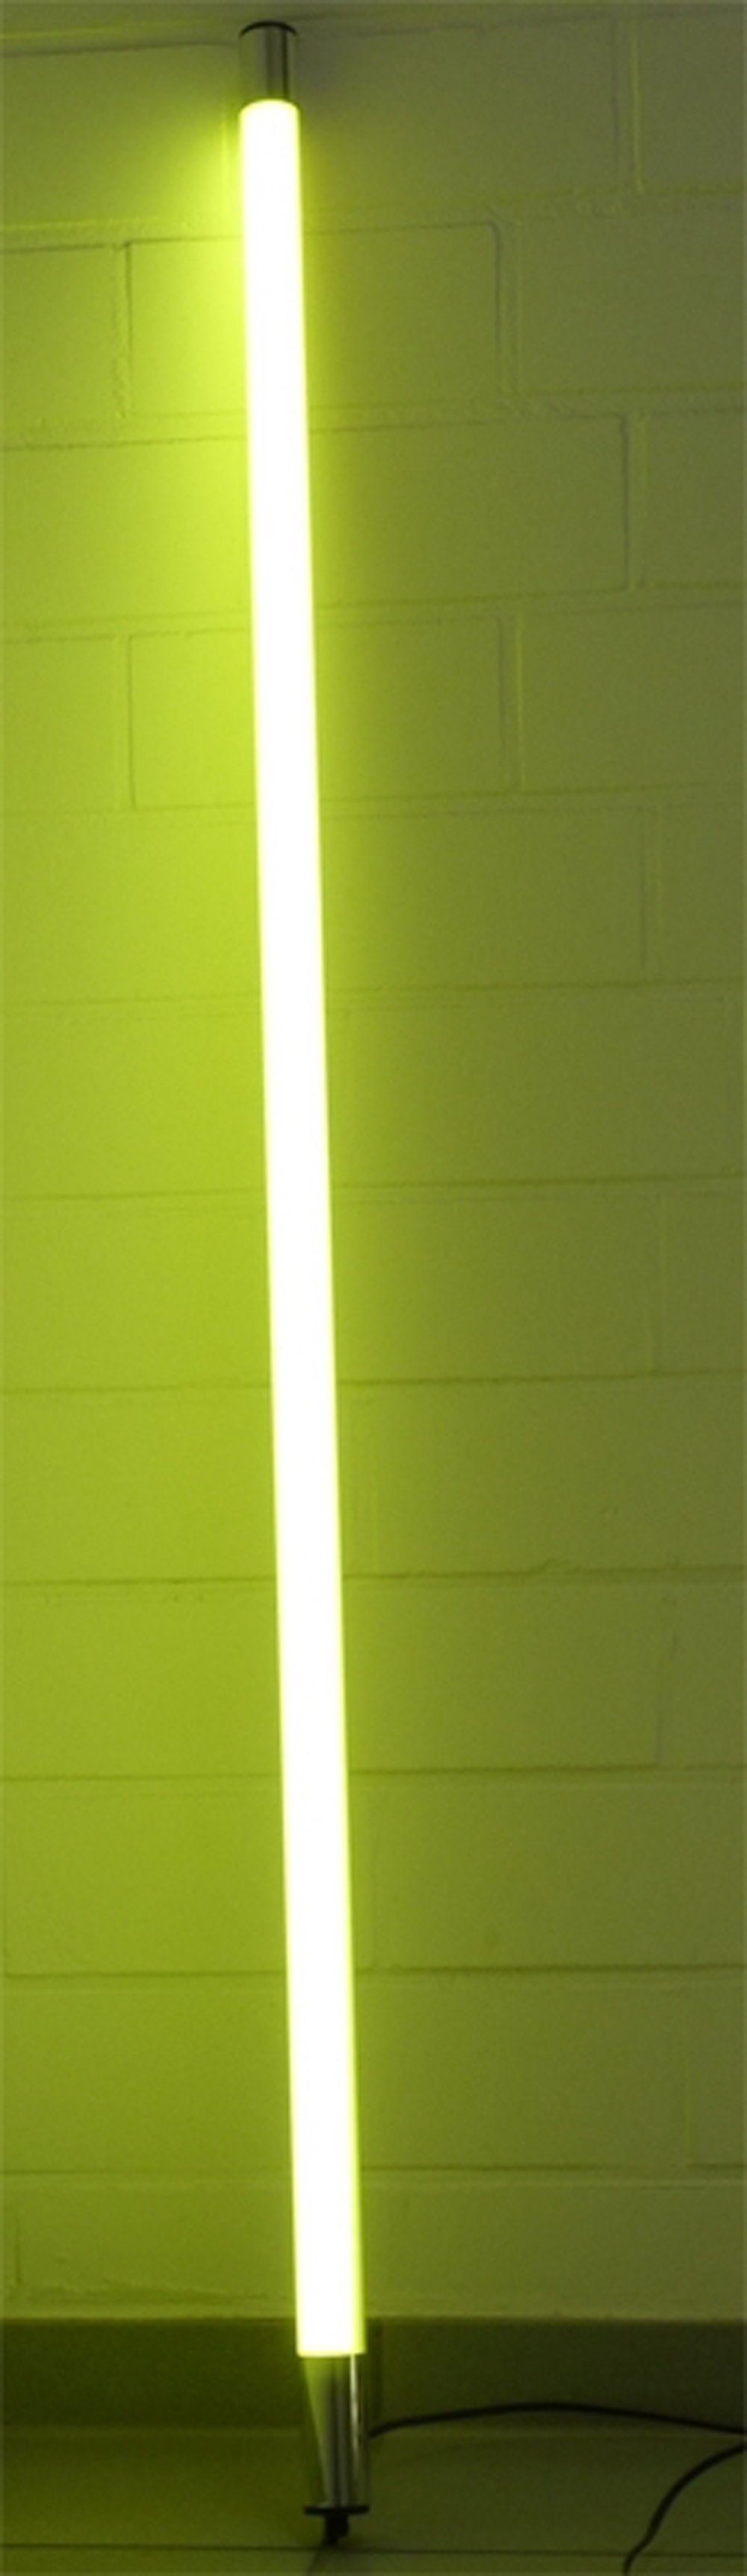 Wandleuchte LED IP20 Gelb LED Röhre LED 6727 T8, Innen 0,63m 1000Lumen Satiniert Gelb, Leuchtstab Lang XENON